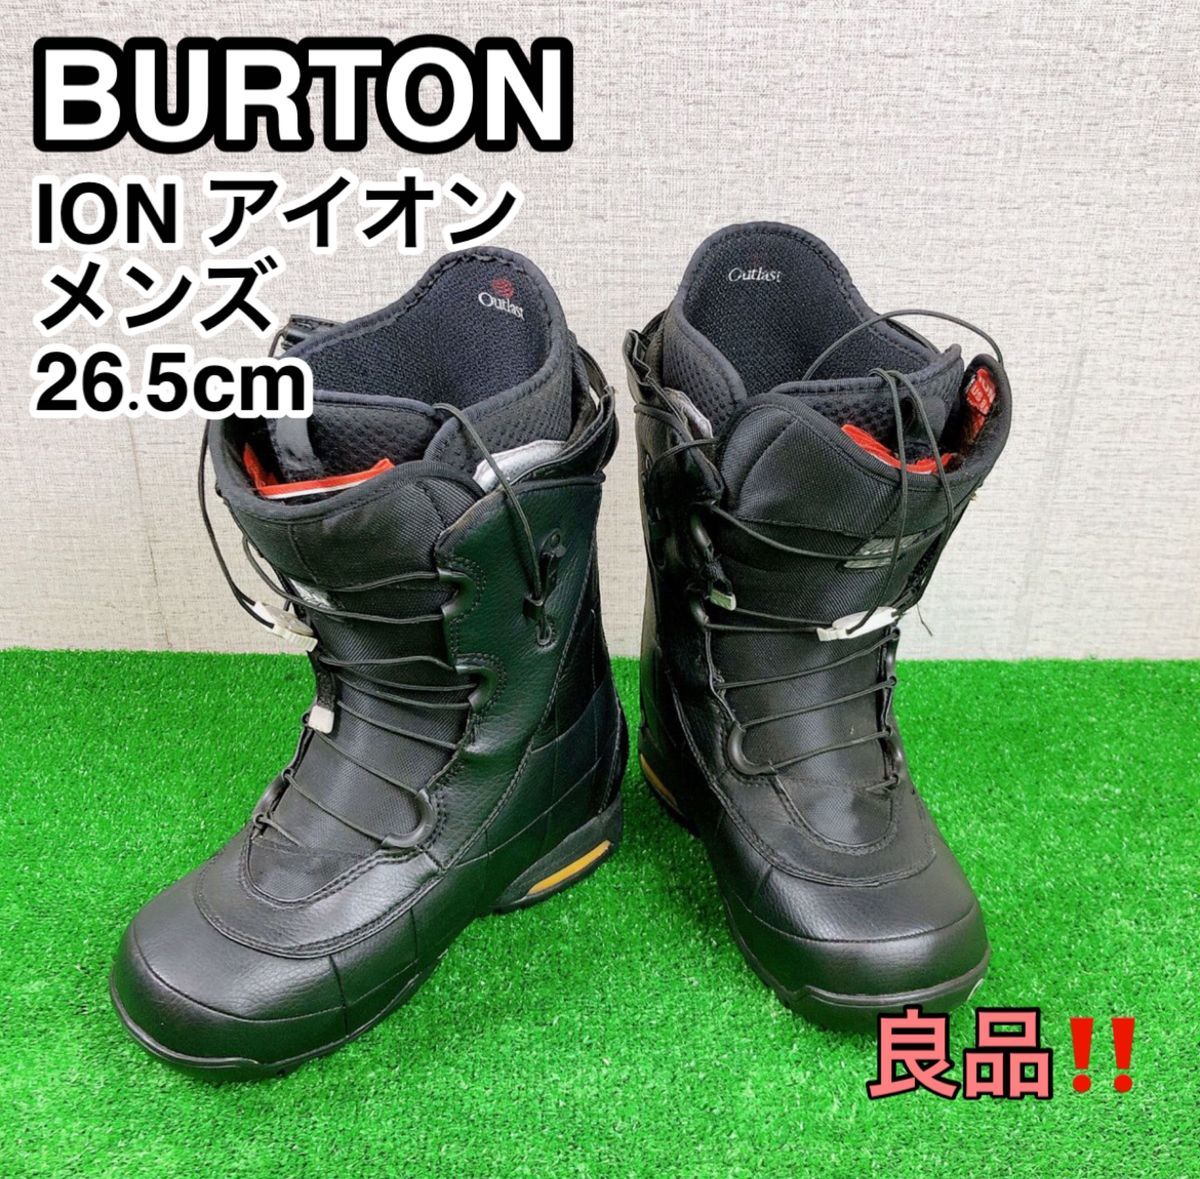 BURTON バートン ION アイオン 26.5cm